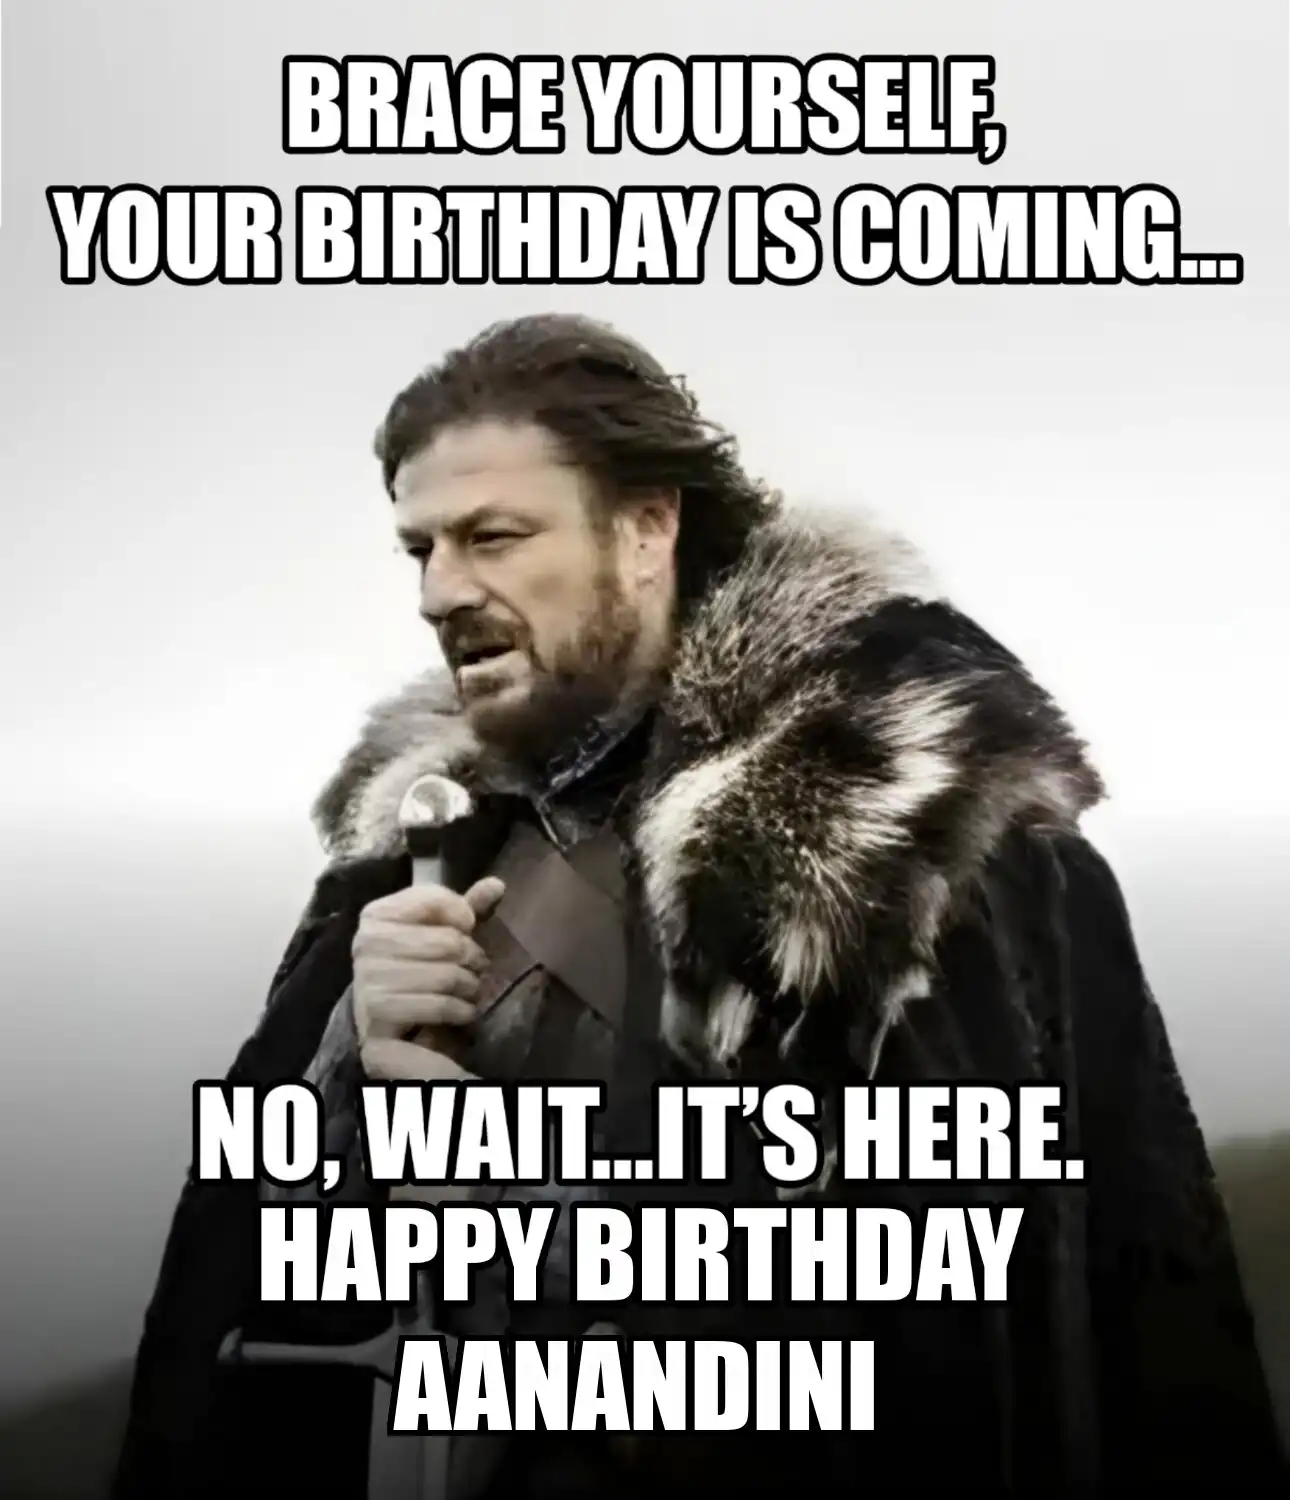 Happy Birthday Aanandini Brace Yourself Your Birthday Is Coming Meme